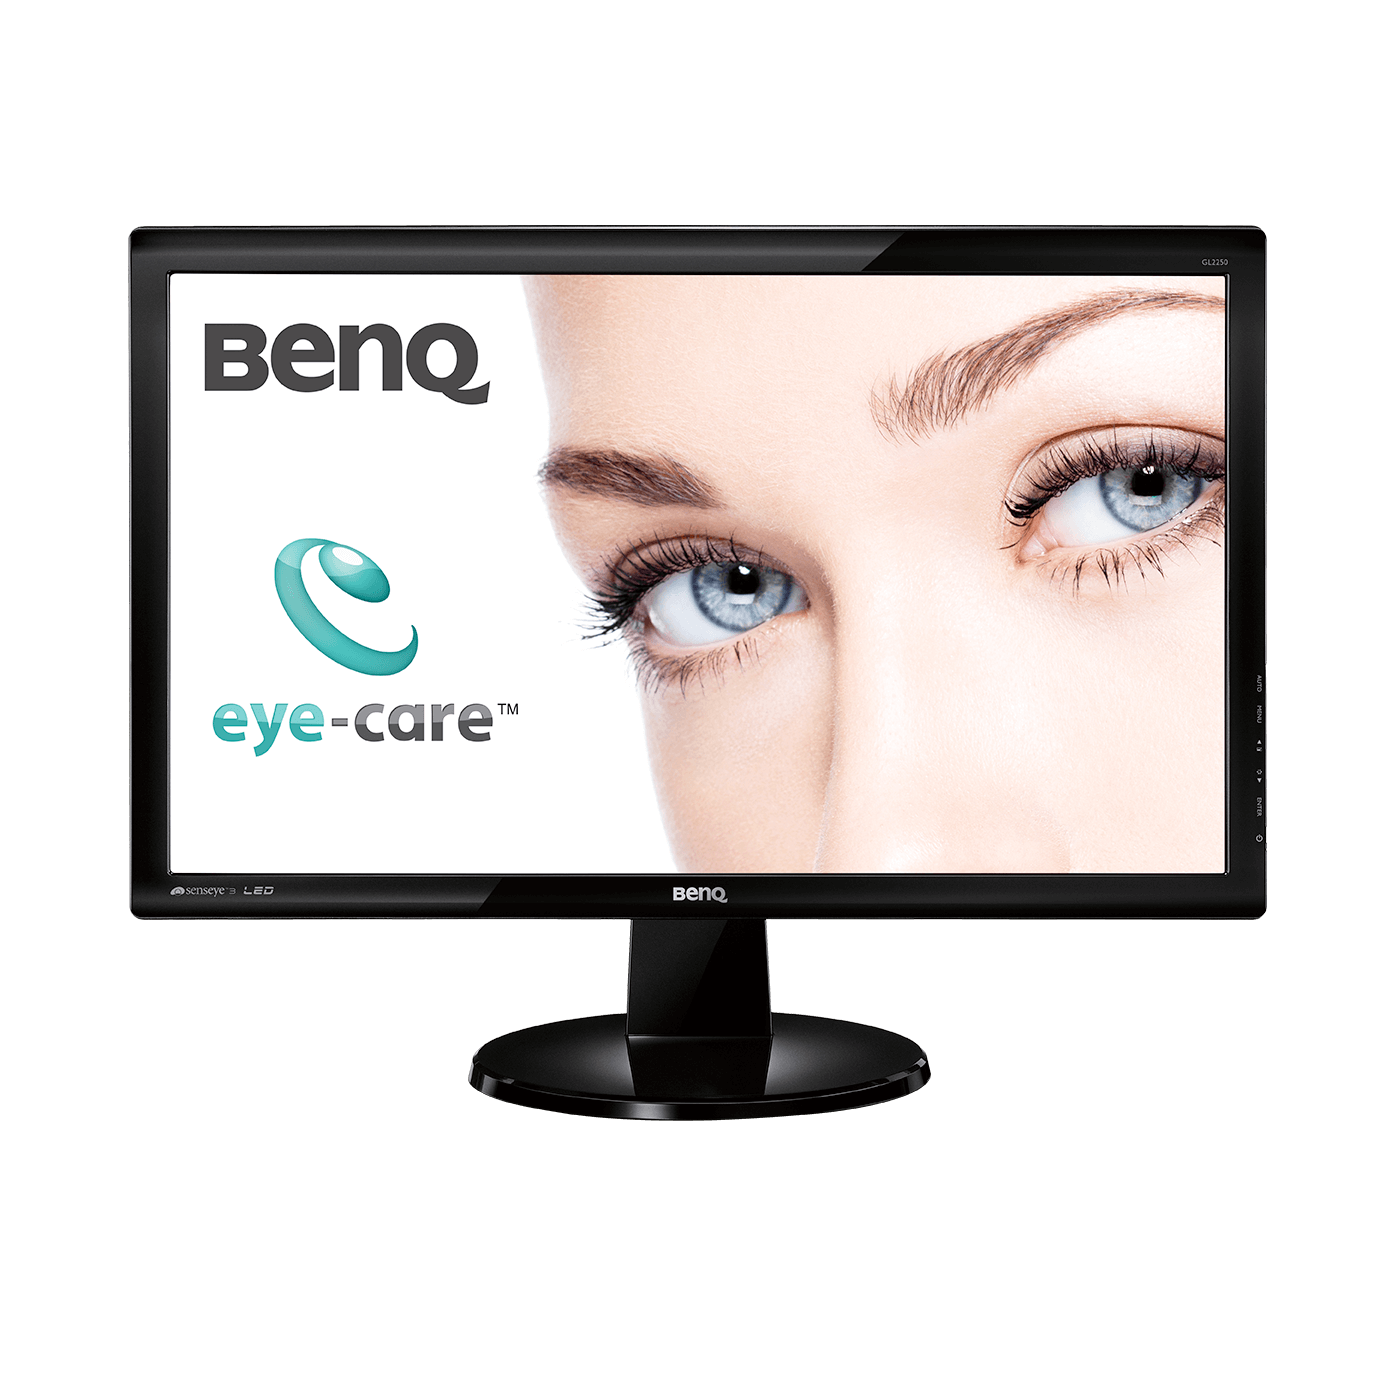 BenQ GL GL2250 21.5 Widescreen LED LCD Monitor DVI VGA Full HD 1920 x 1080